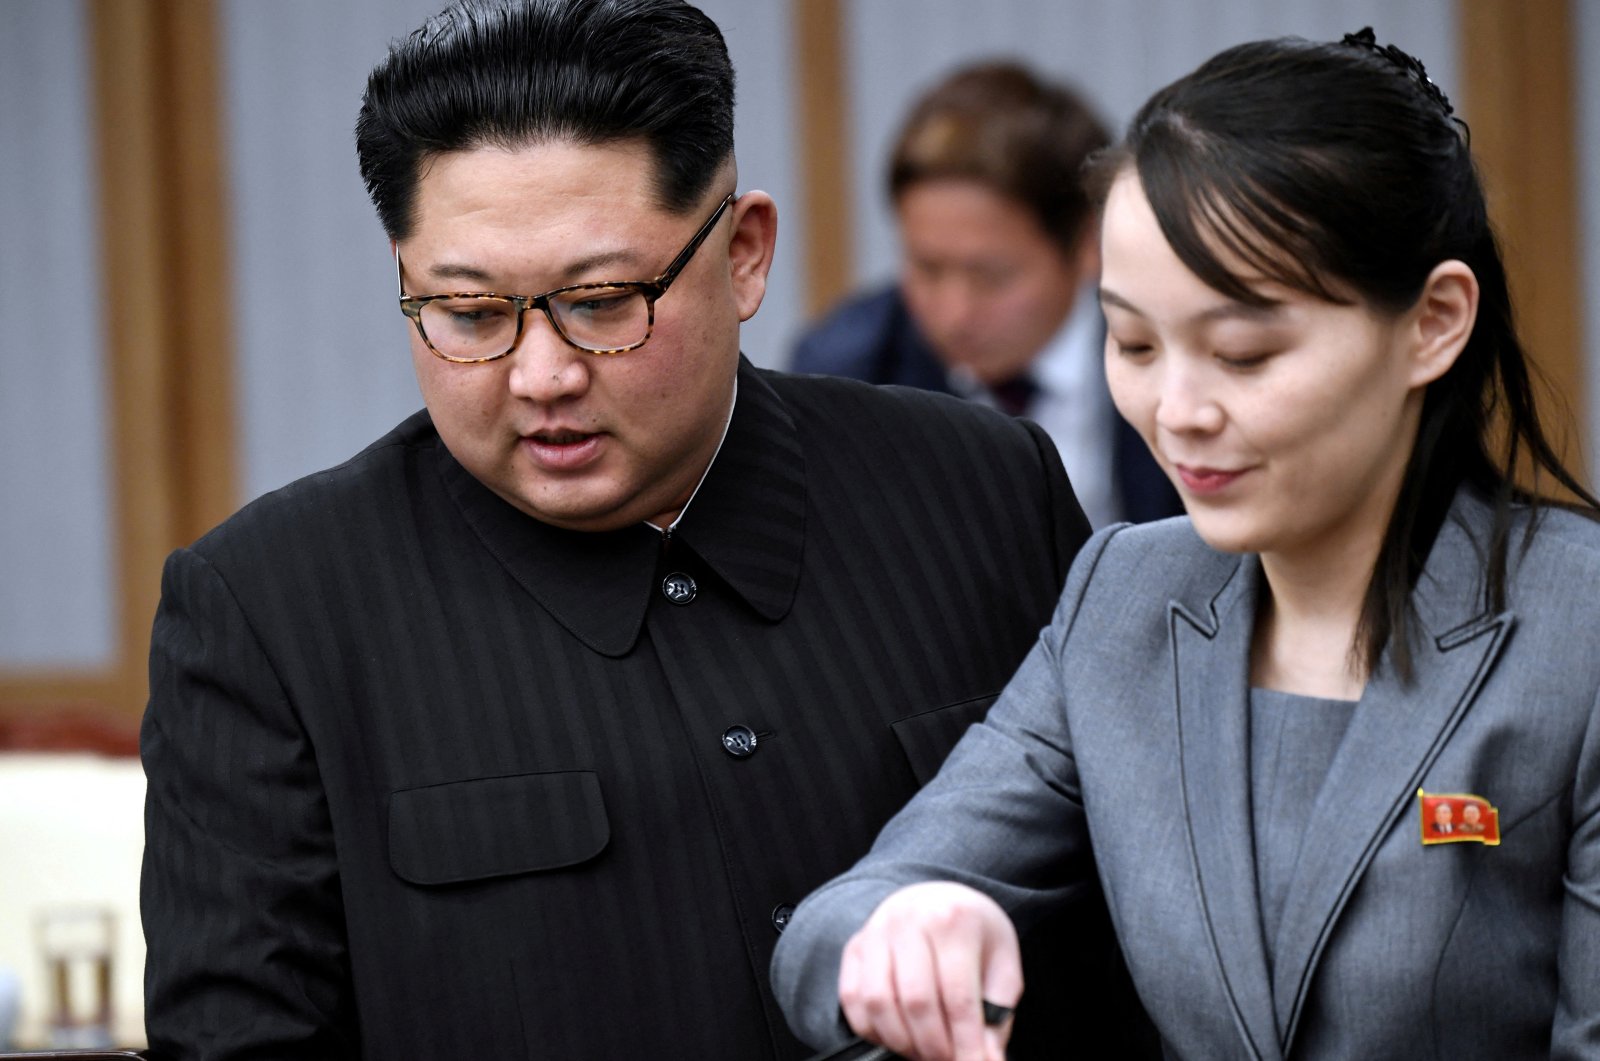 North Korean leader Kim Jong Un and his sister Kim Yo Jong attend a program inside the demilitarized zone separating the two Koreas, South Korea, April 27, 2018. (Reuters Photo)